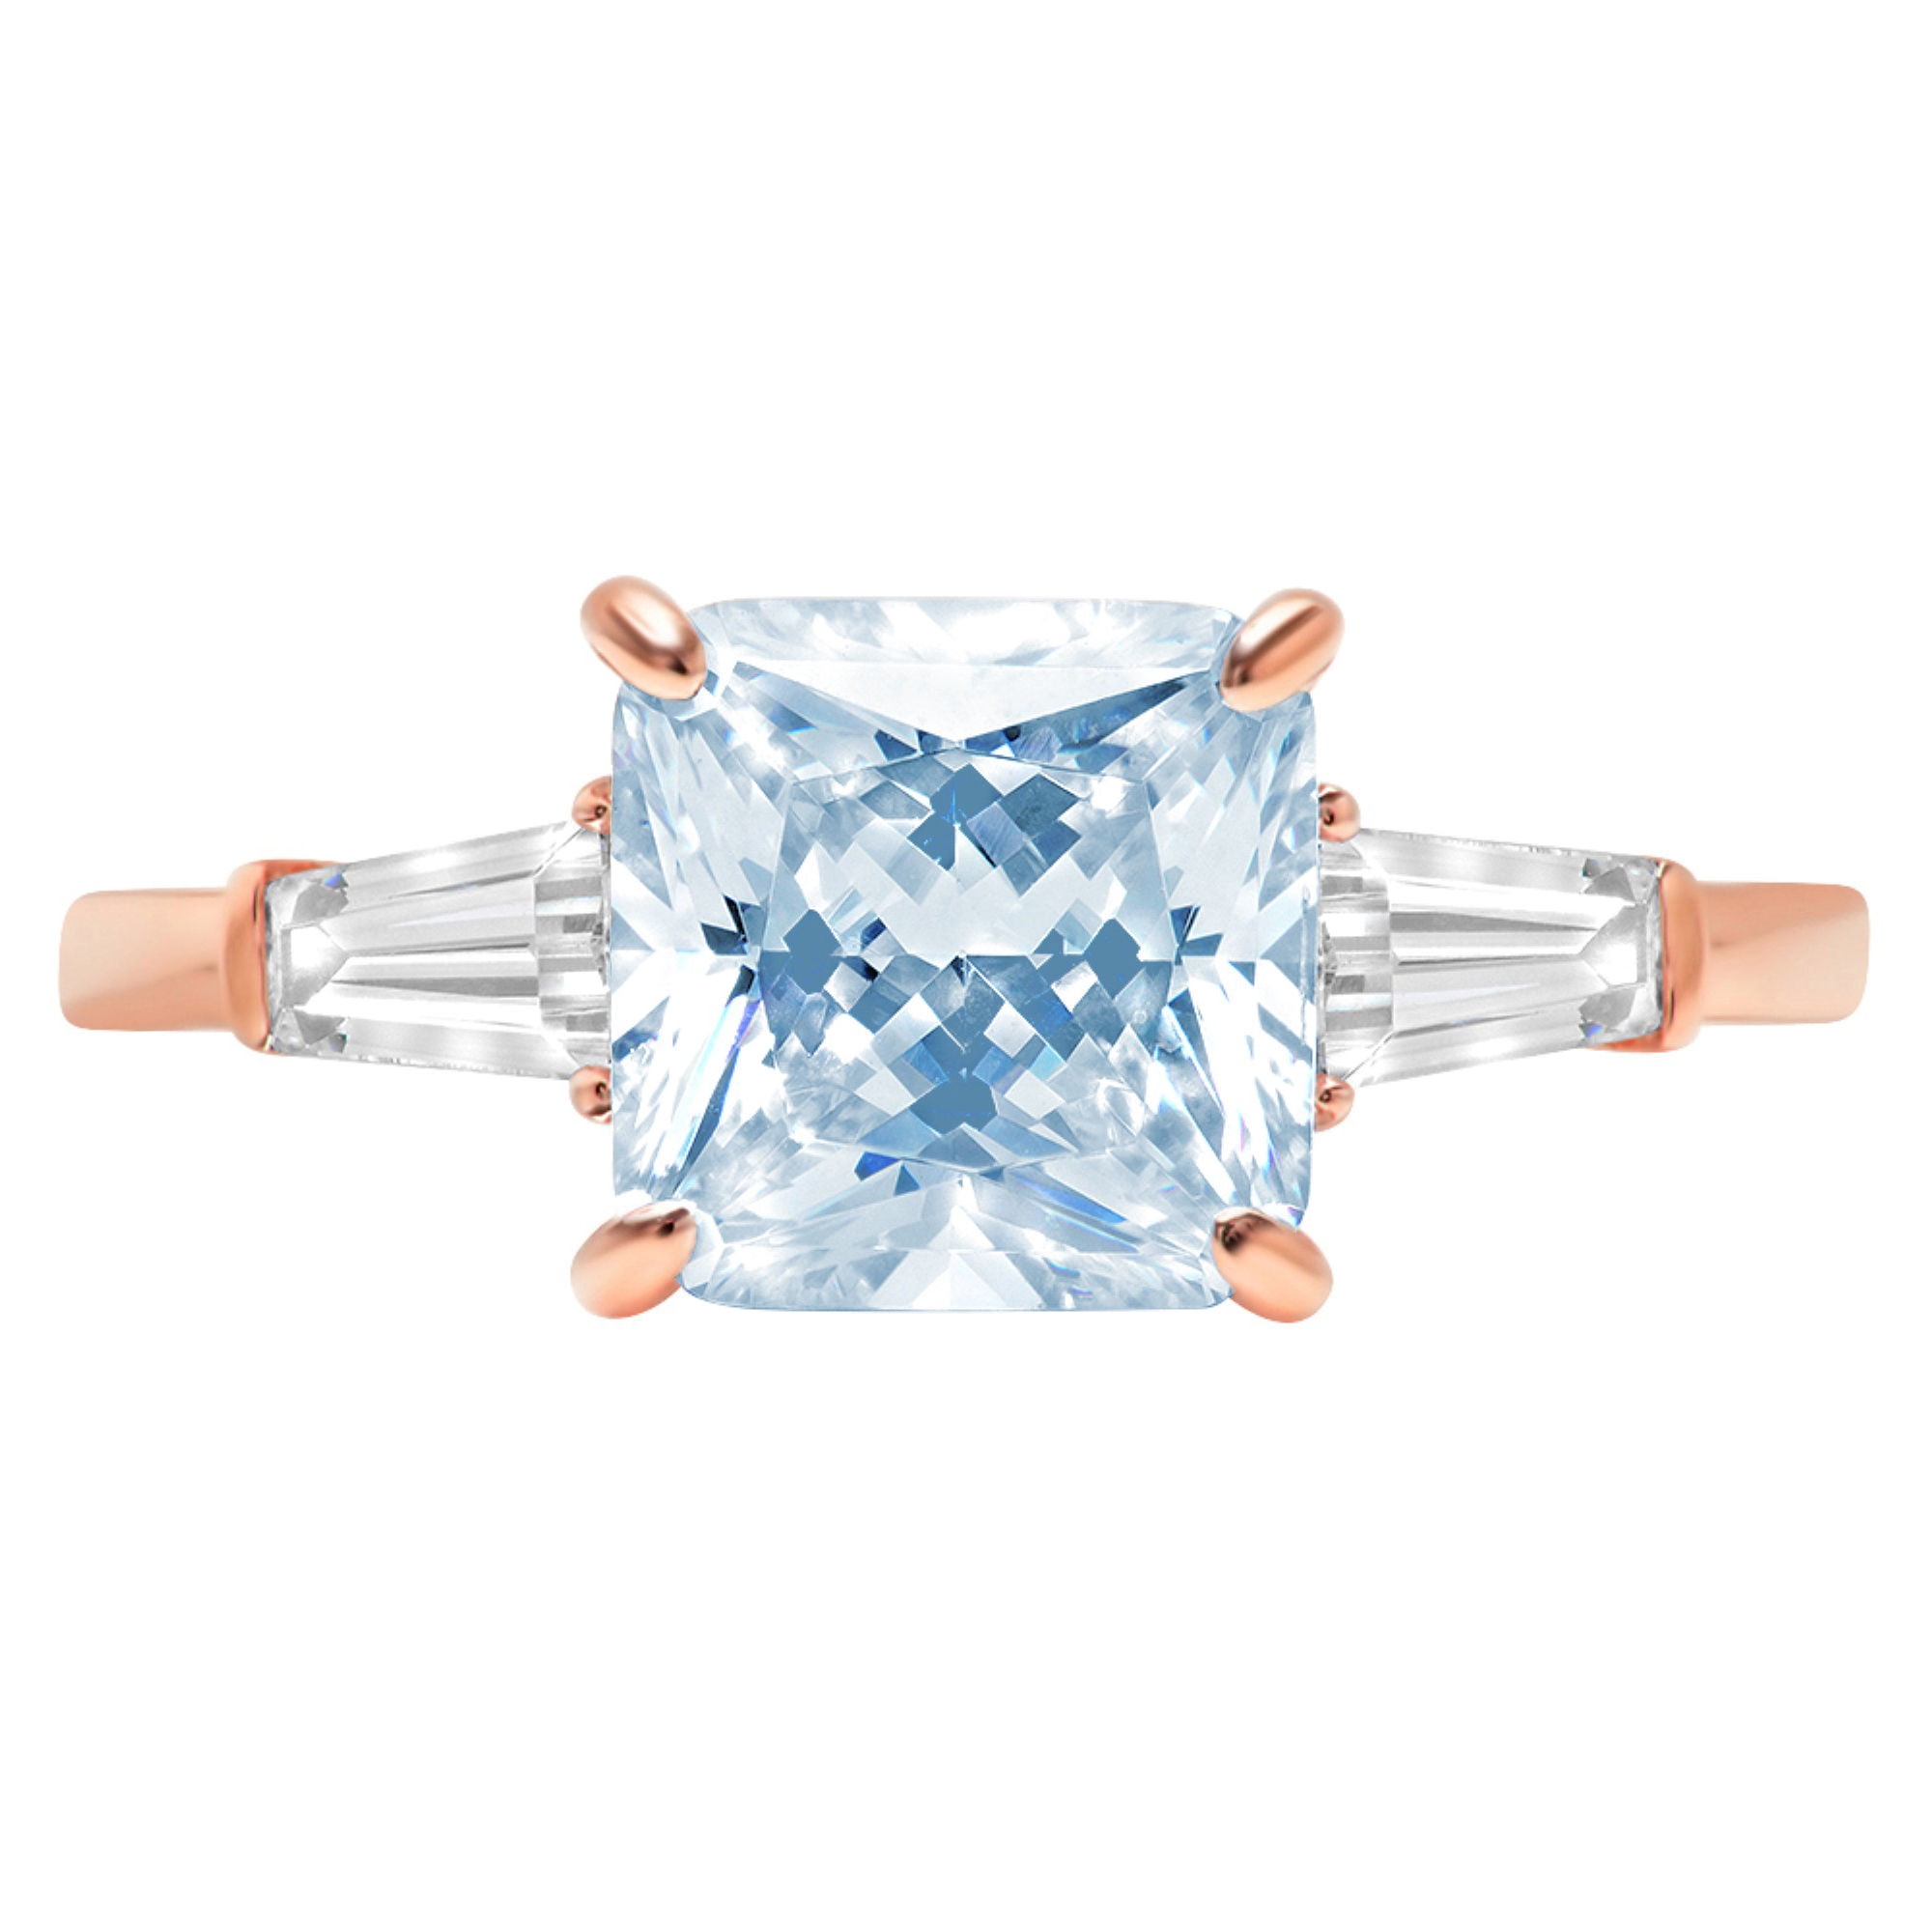 1.0 ct Asscher Cut Natural Aquamarine Classic Wedding Engagement Bridal Promise Designer Ring Solid 14k White Gold